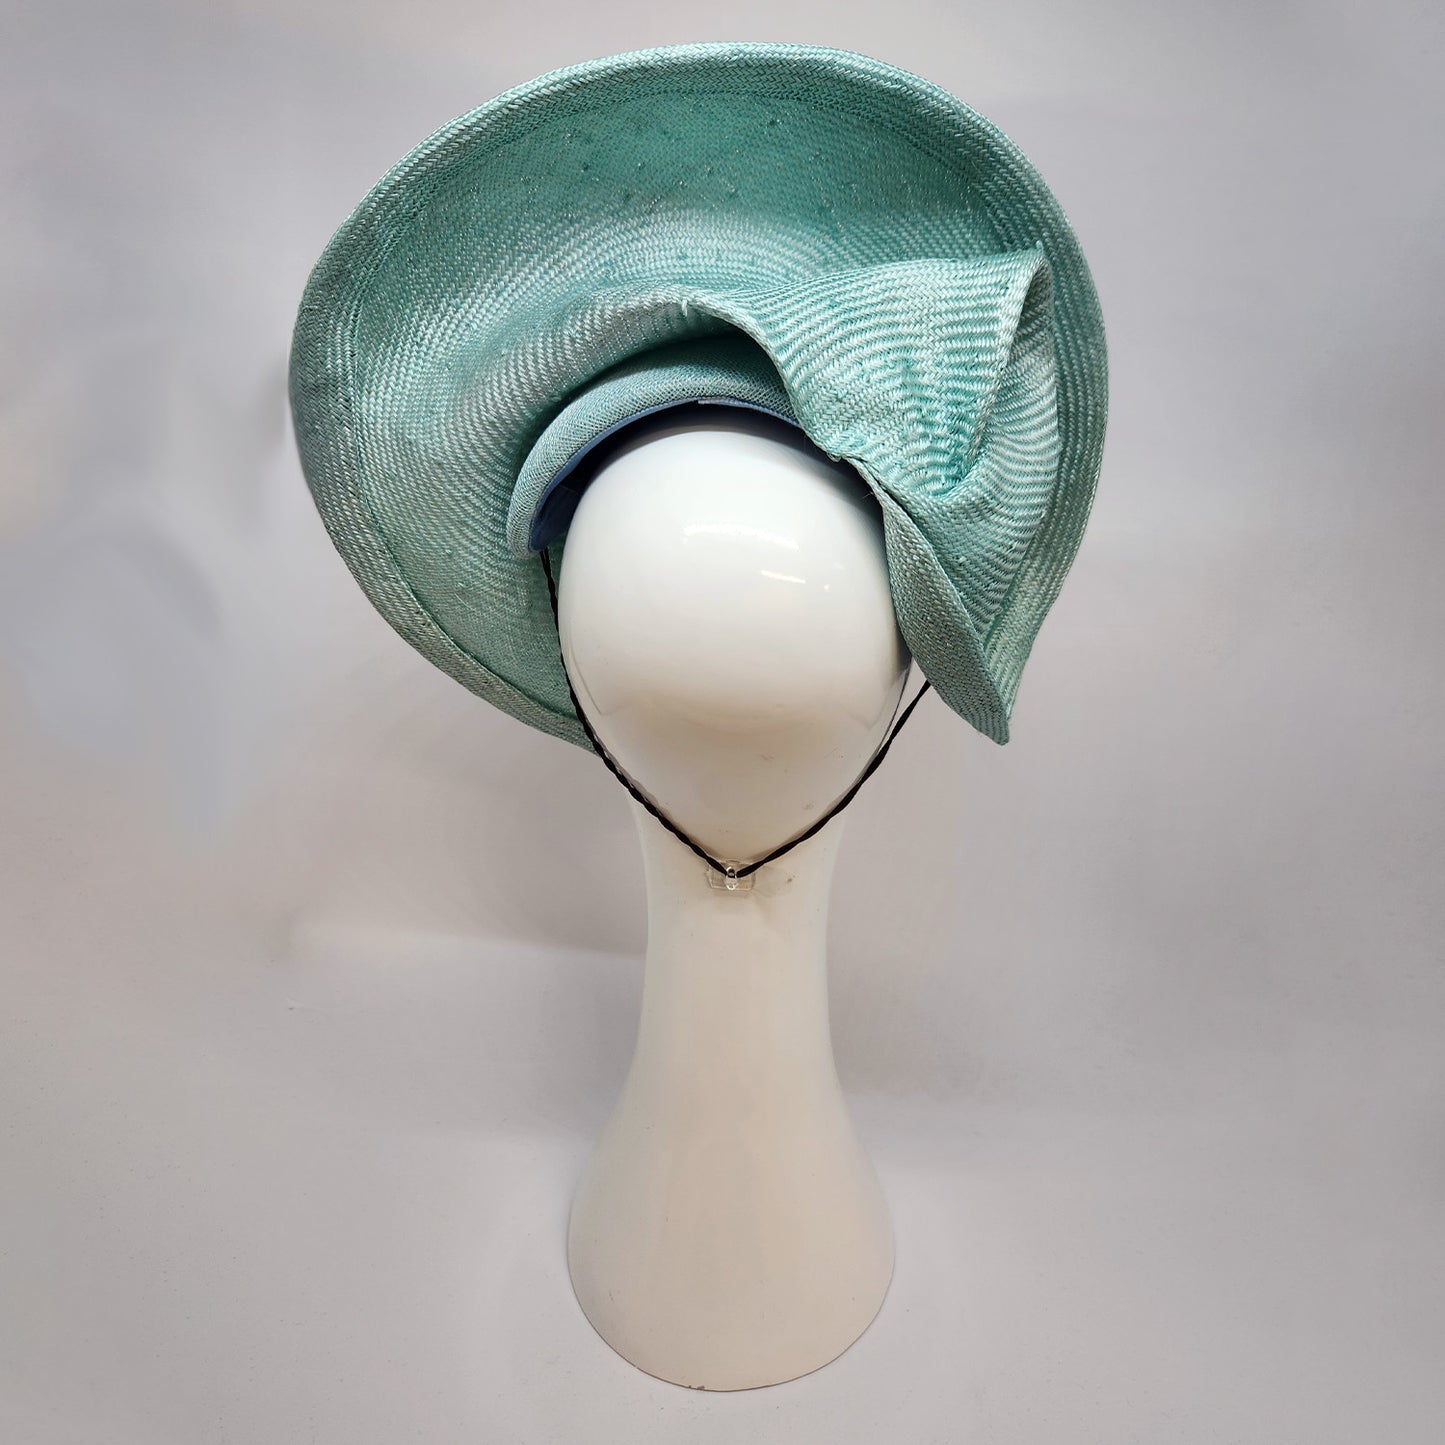 Calla Bloom draped mint parisial headpiece